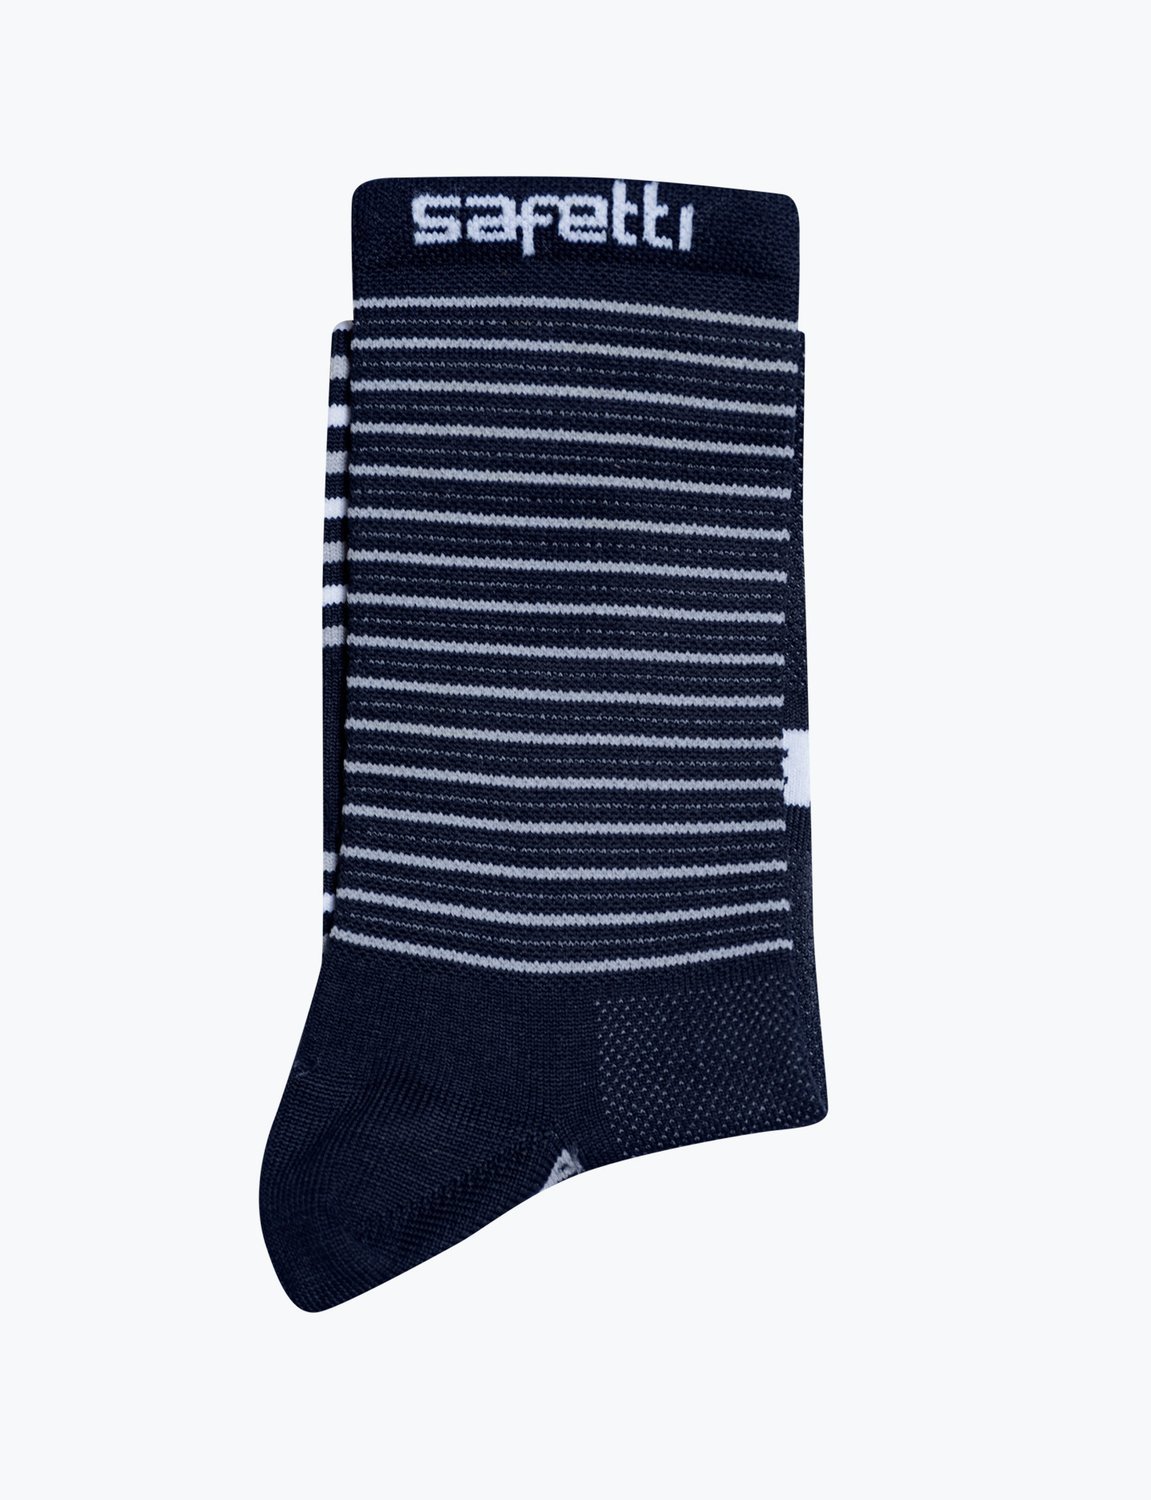 Socks - Colors Black